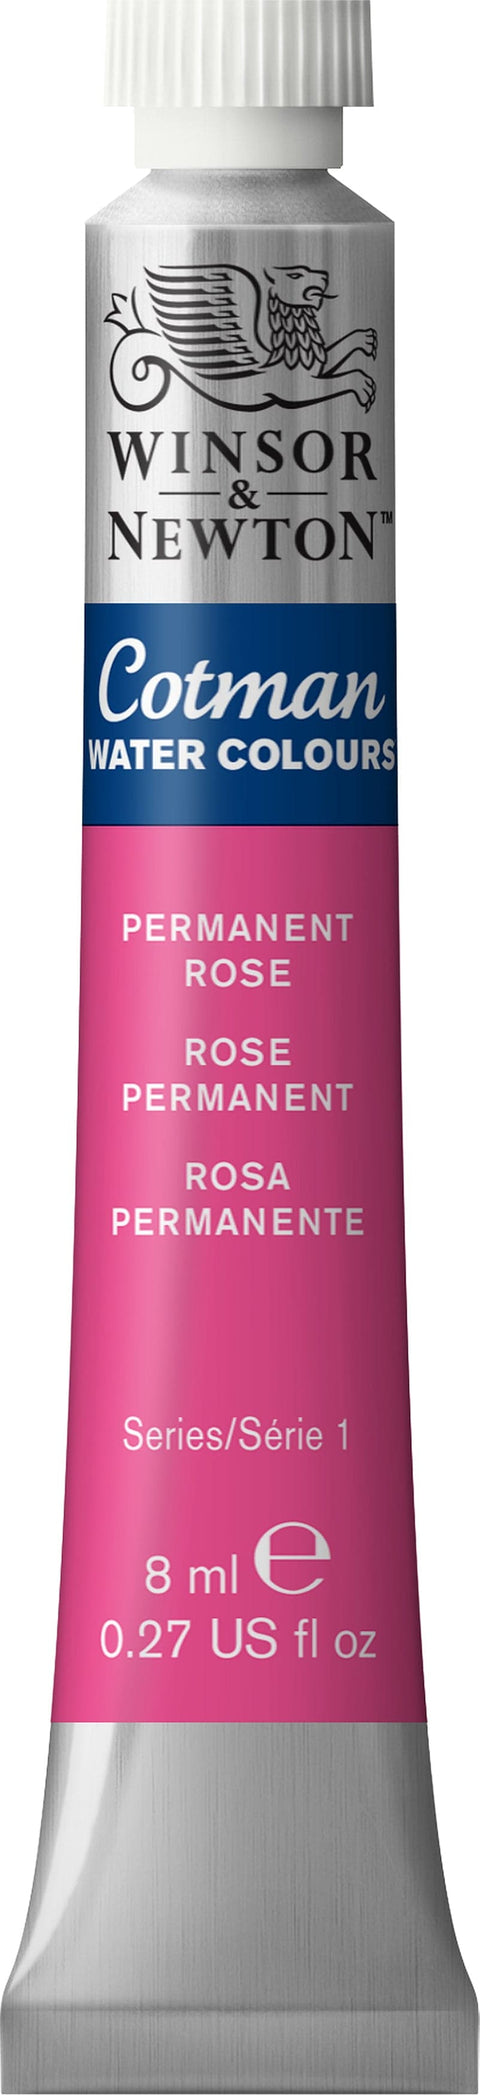 Winsor & Newton Cotman Water Colours 8ml-Permanent Rose